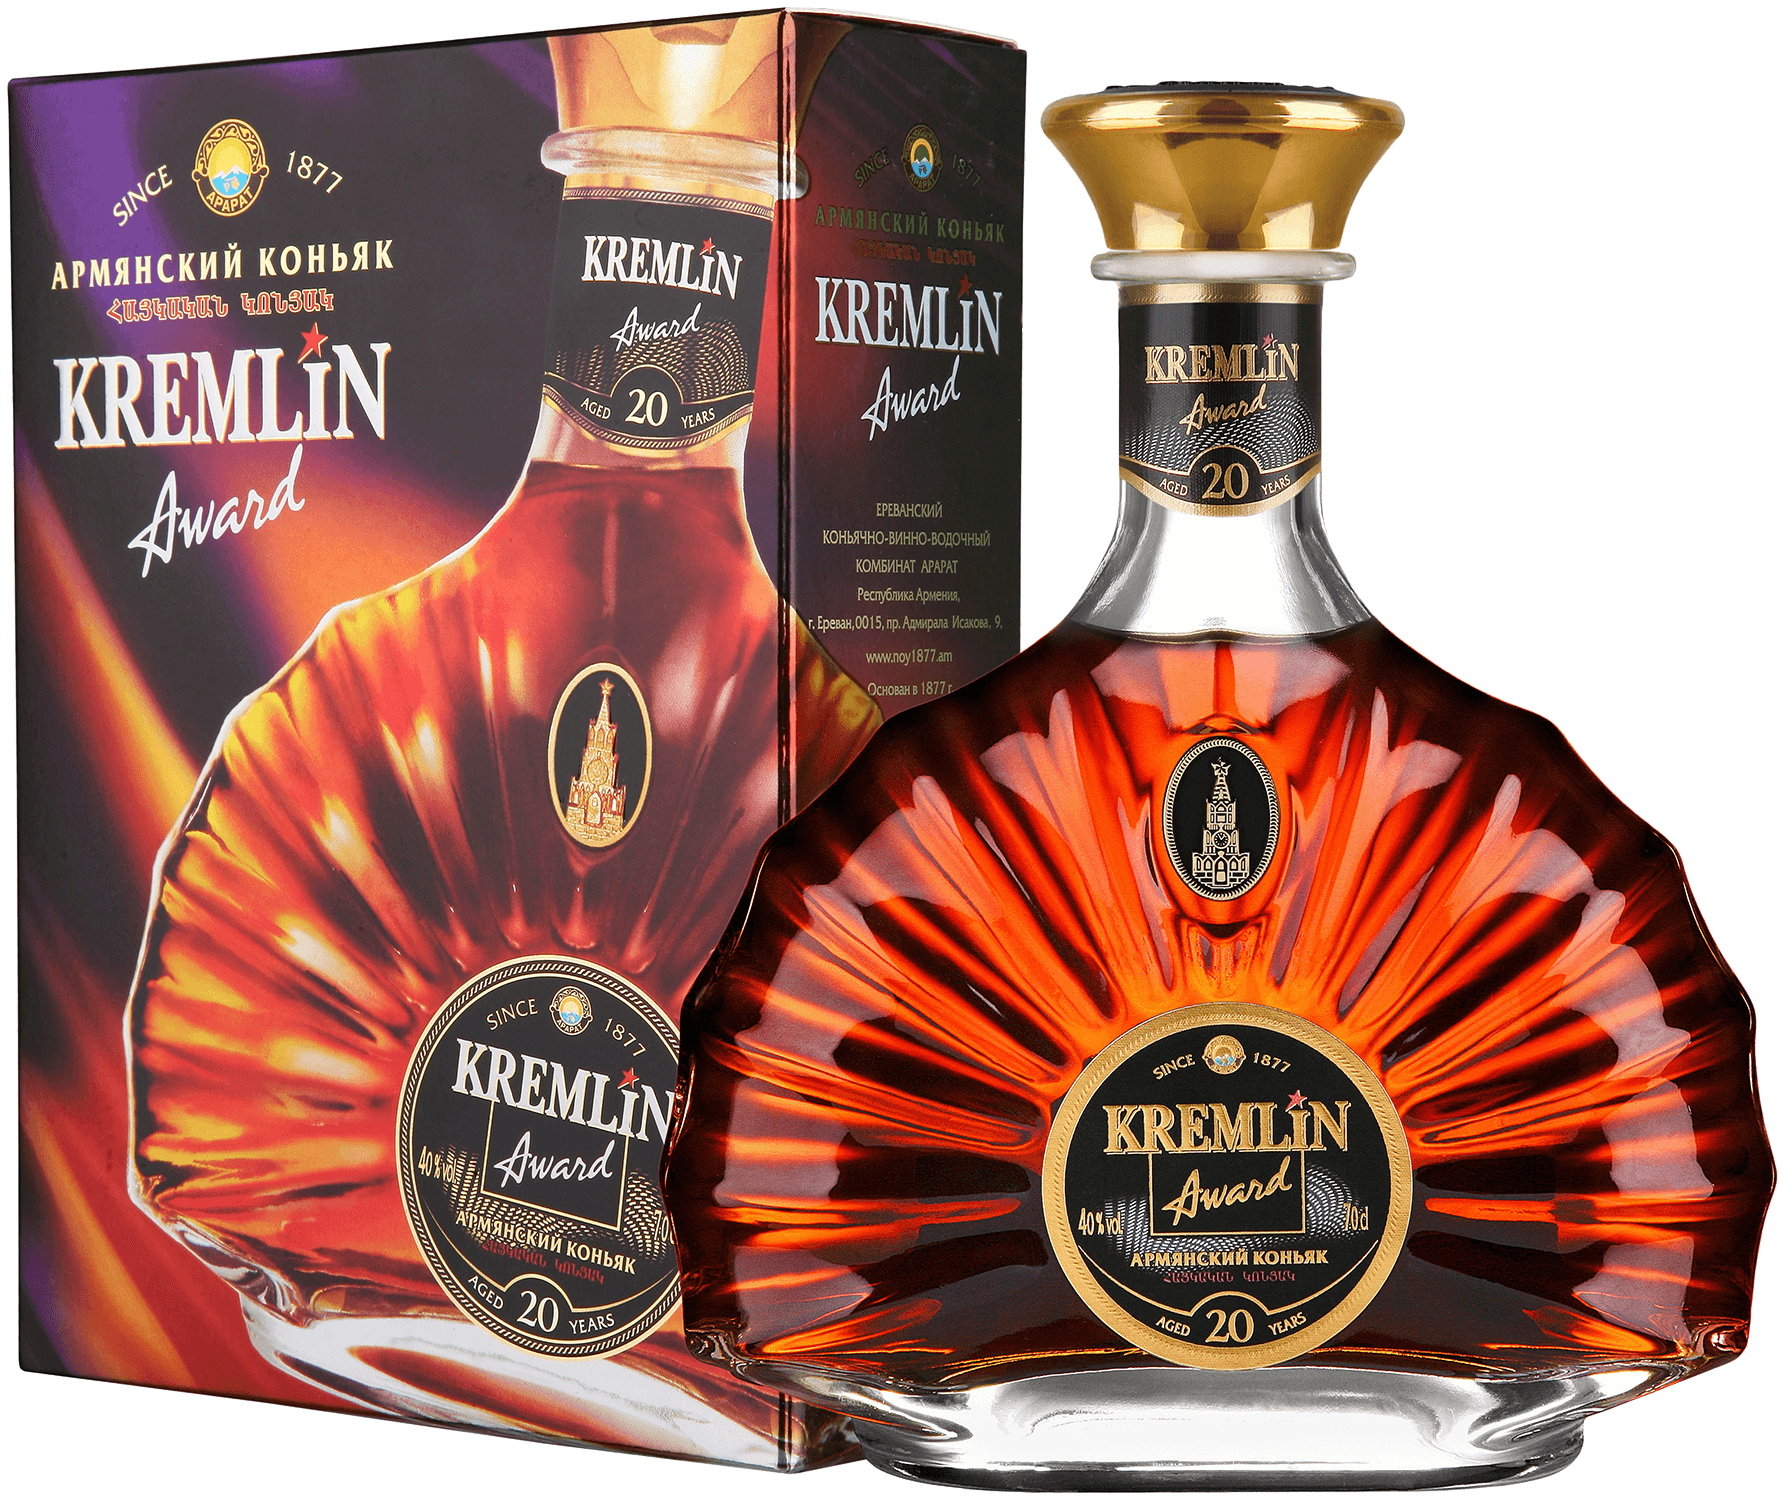 KREMLIN AWARD 20 Years (gift box) kremlin award grand premium vodka gift box